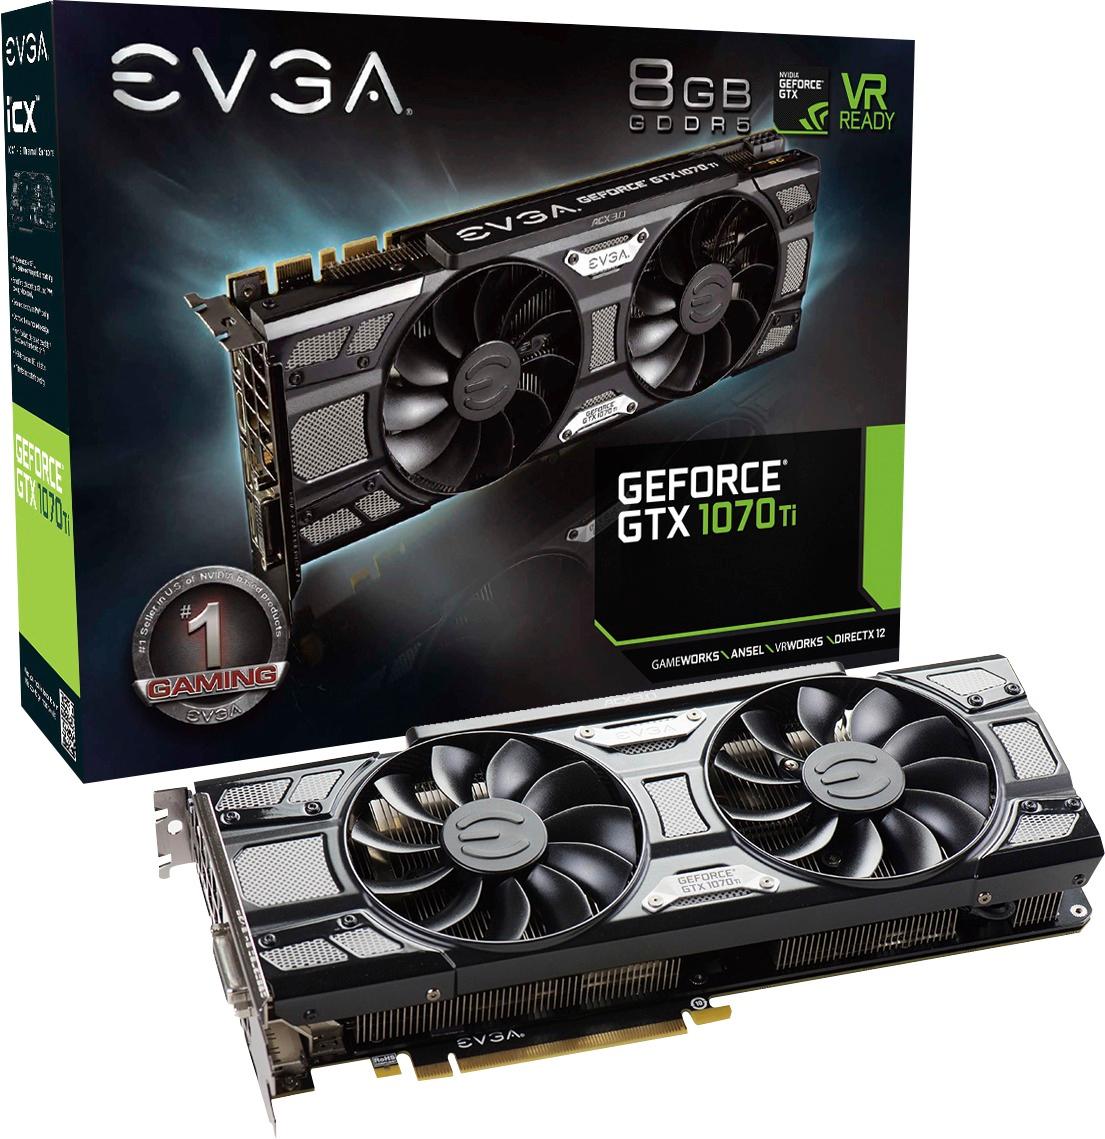 Best Buy: EVGA NVIDIA GeForce GTX 1070 Ti SC Gaming 8GB GDDR5 PCI 